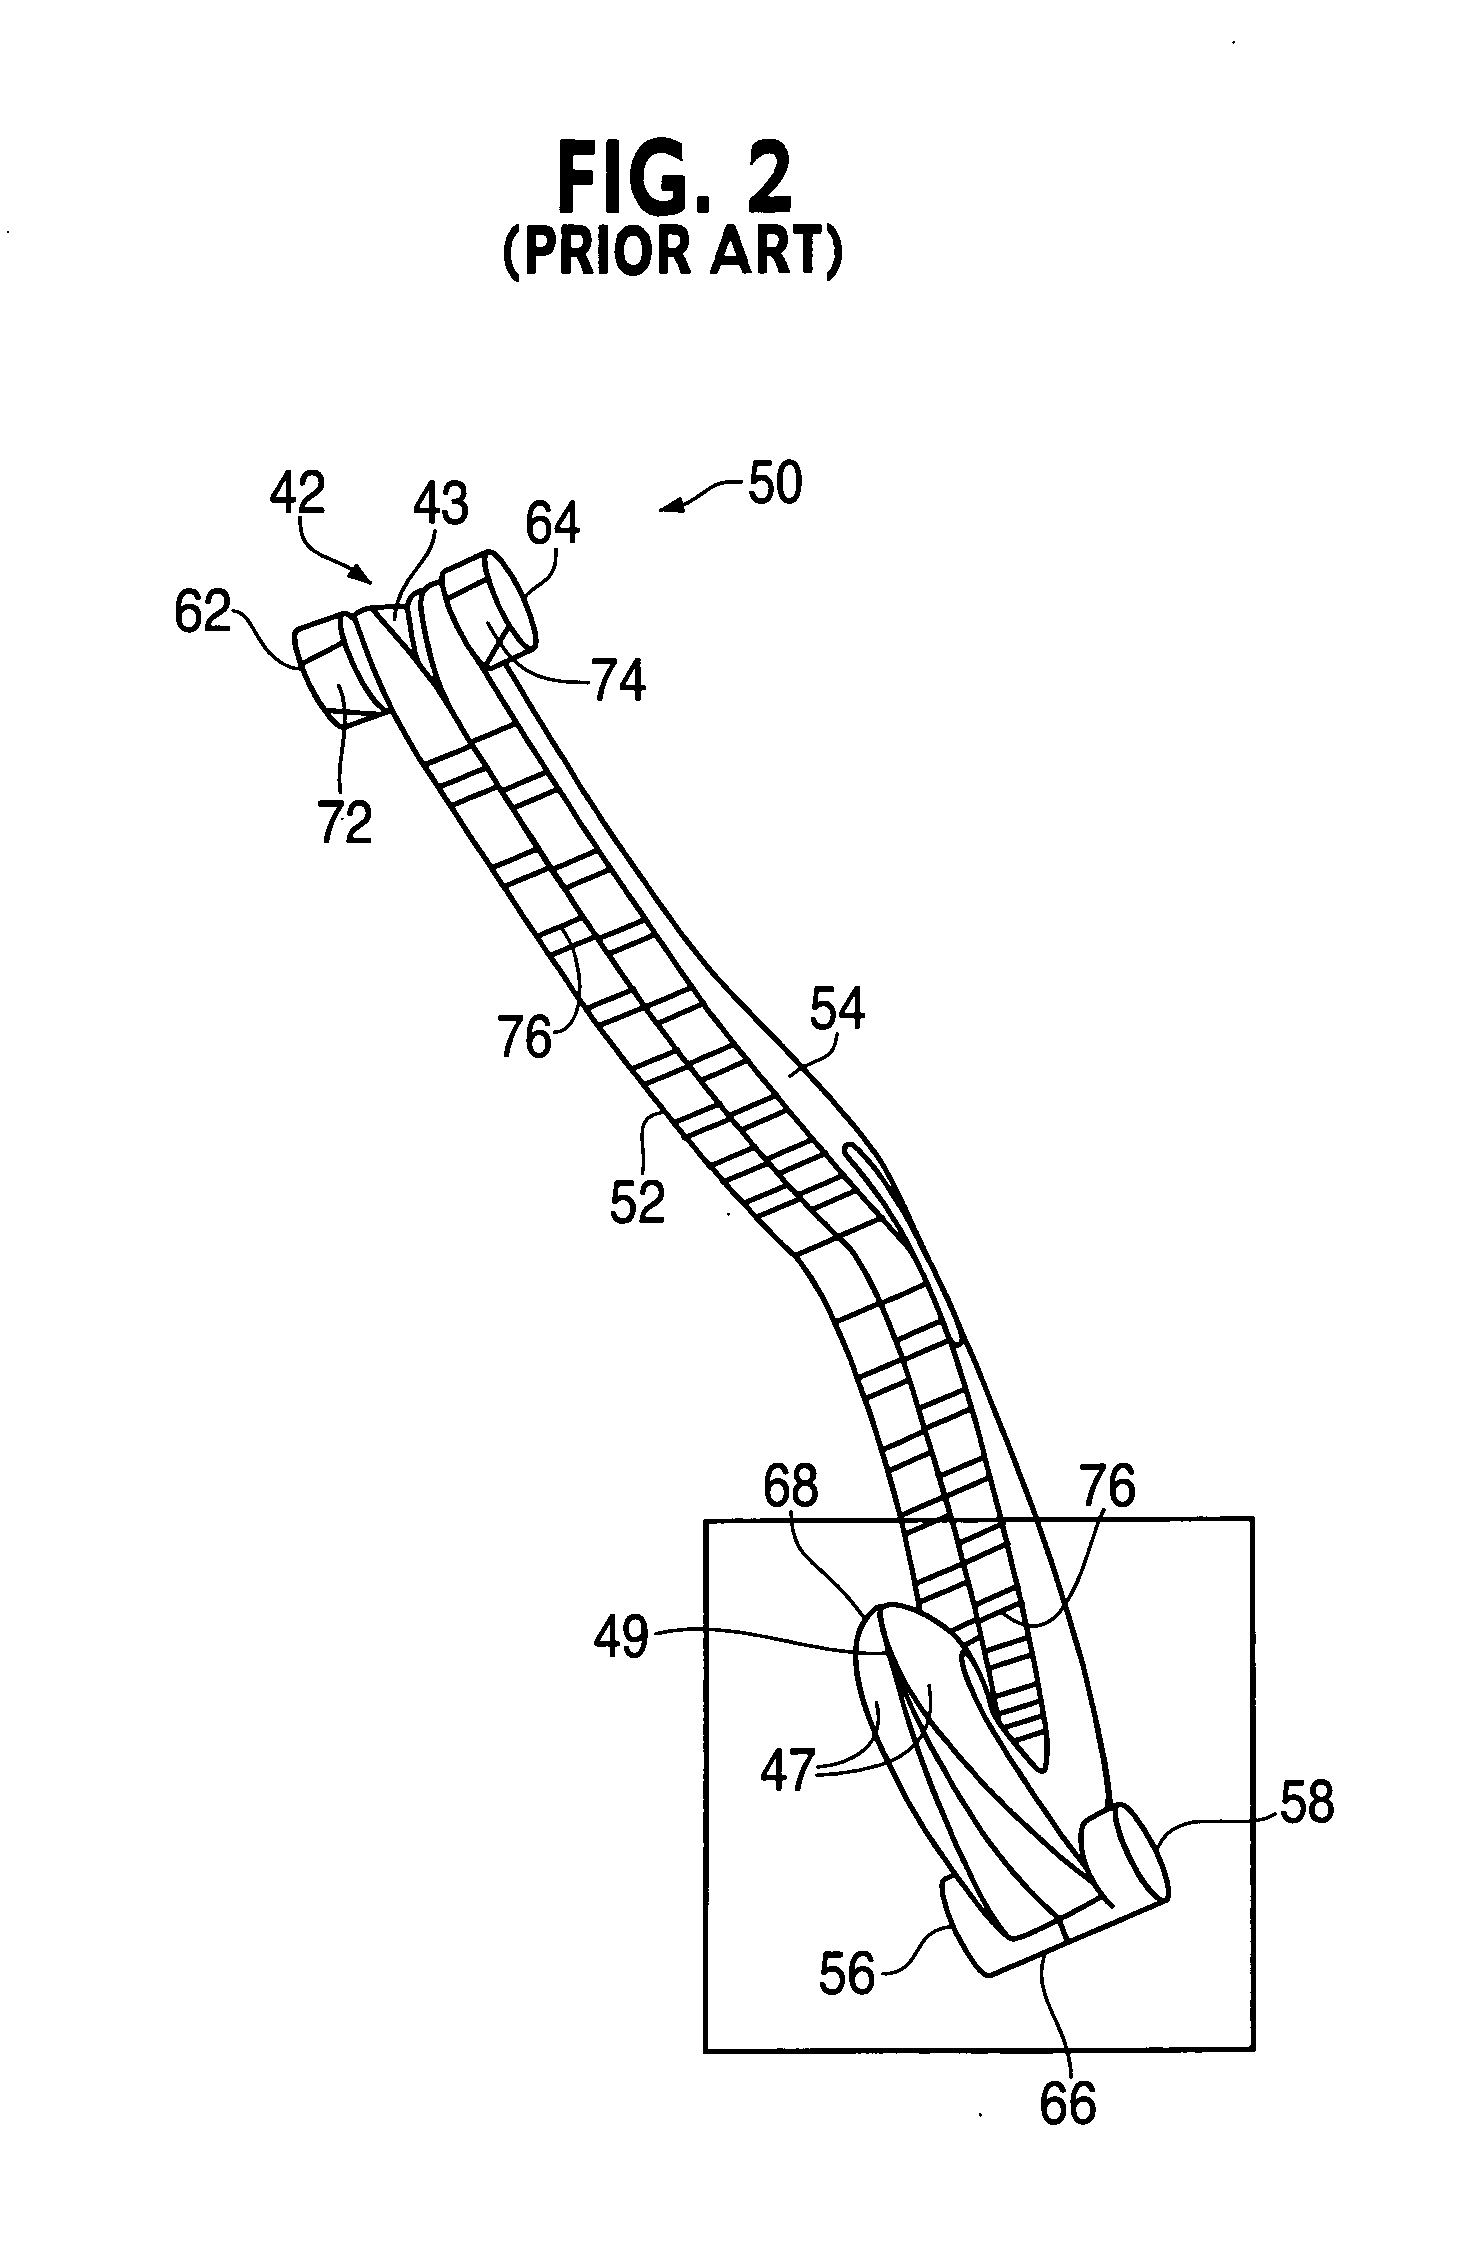 Non-snag polymer ligating clip